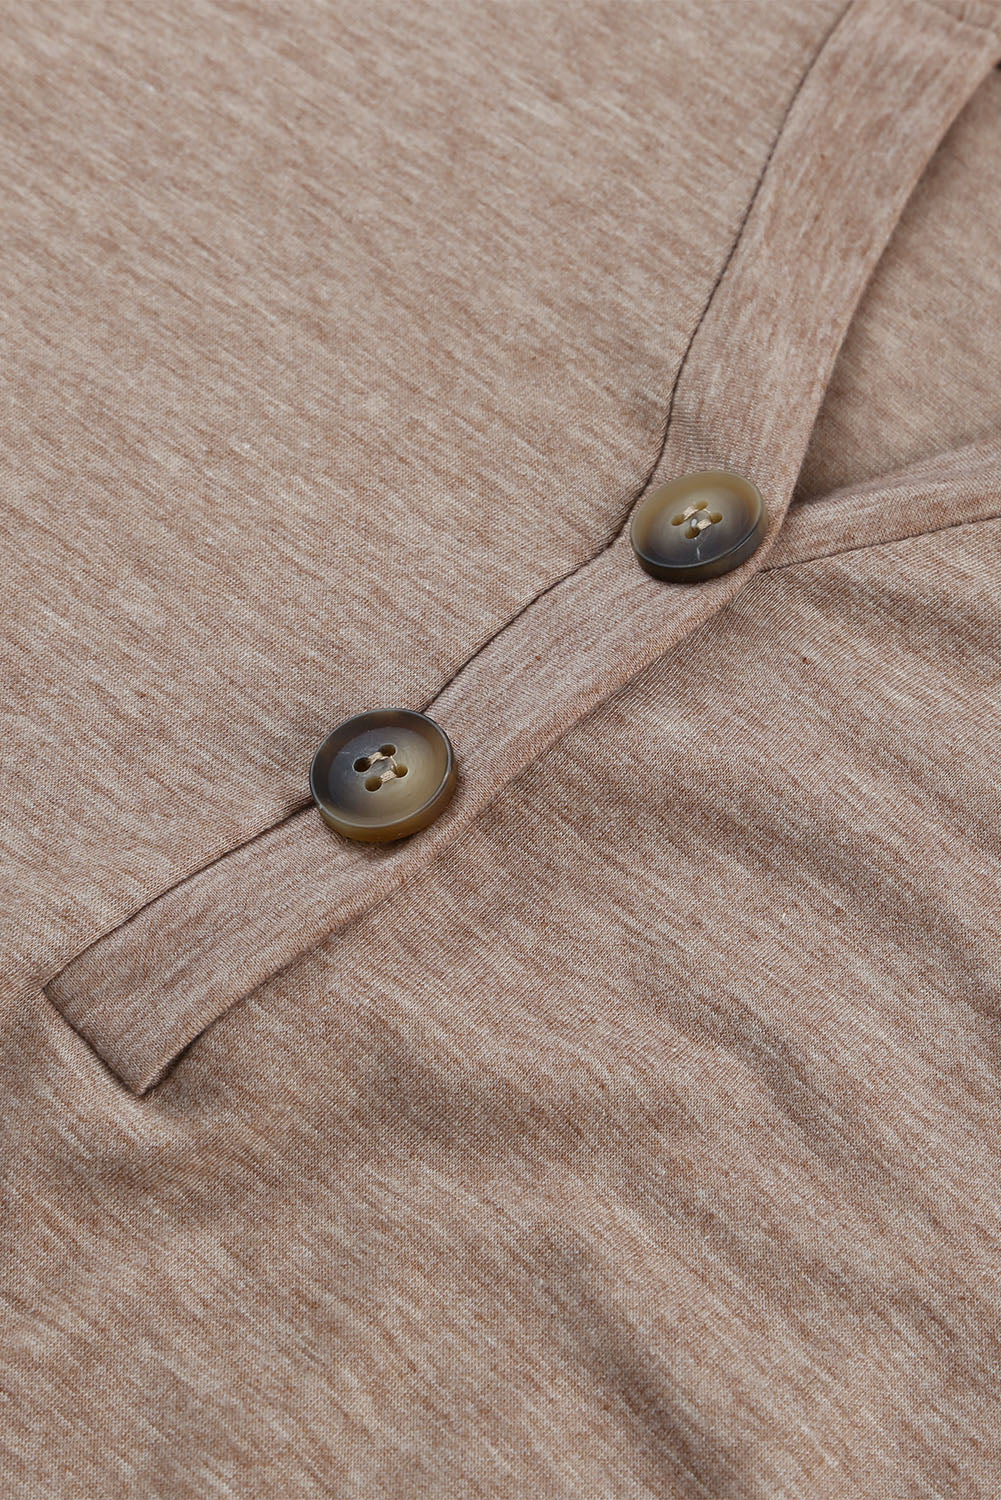 Khaki Button V Neck Rolled Sleeve T Shirt